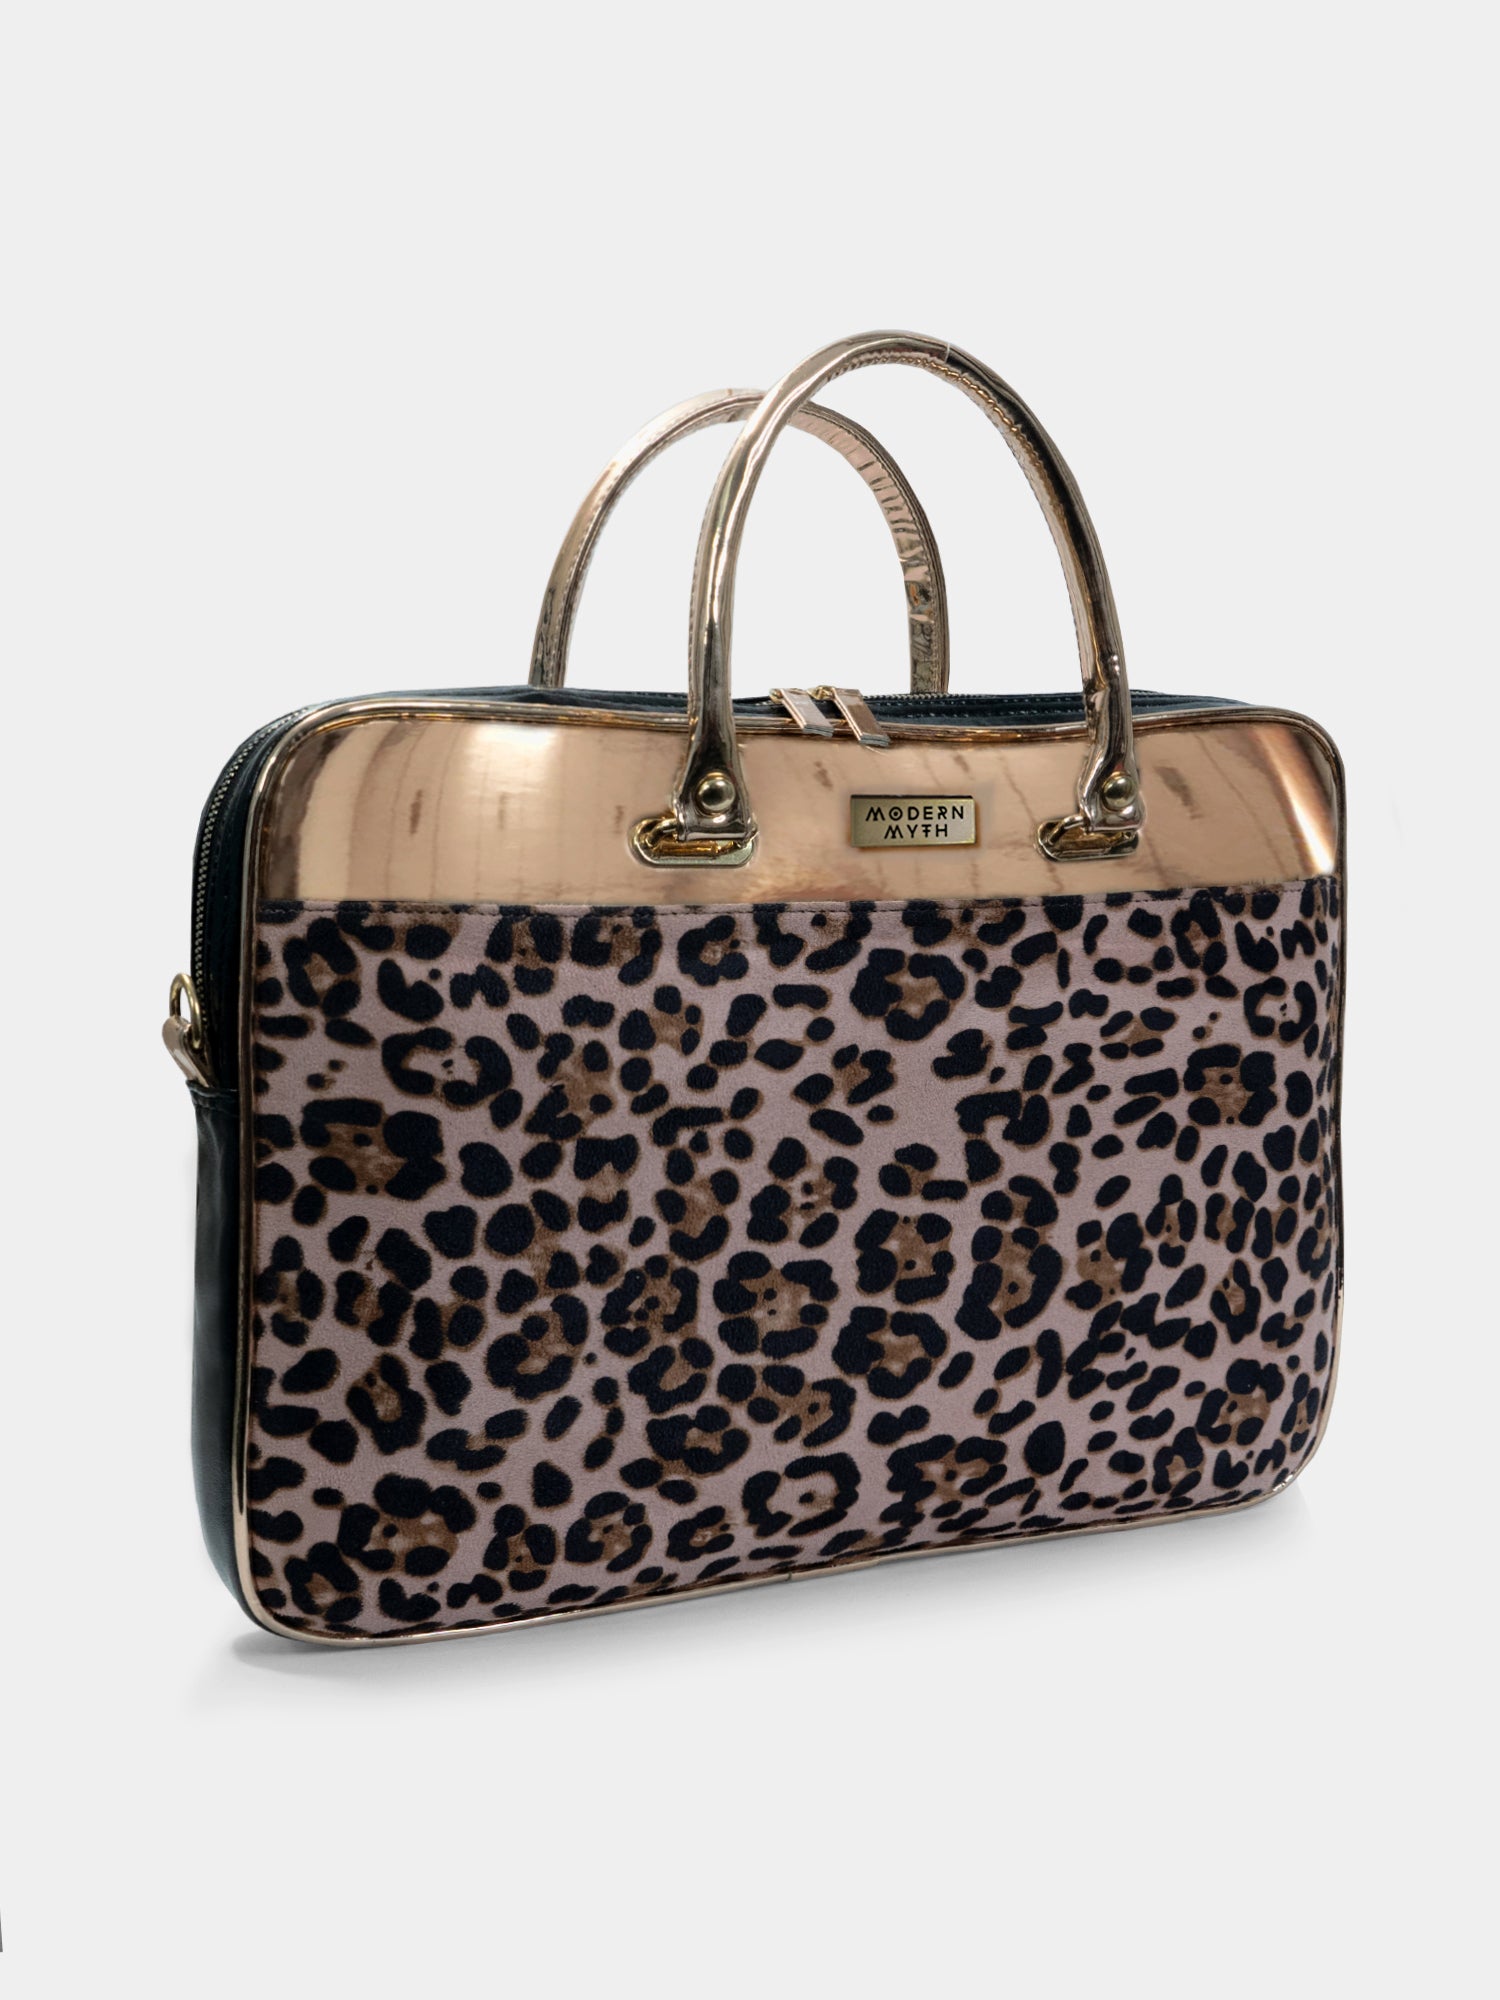 Modern Myth Leopard Cheetah Print & Metallic Rosegold Laptop Sleeve Bag For  Up To 15 Laptop/macbook: Buy Modern Myth Leopard Cheetah Print & Metallic  Rosegold Laptop Sleeve Bag For Up To 15